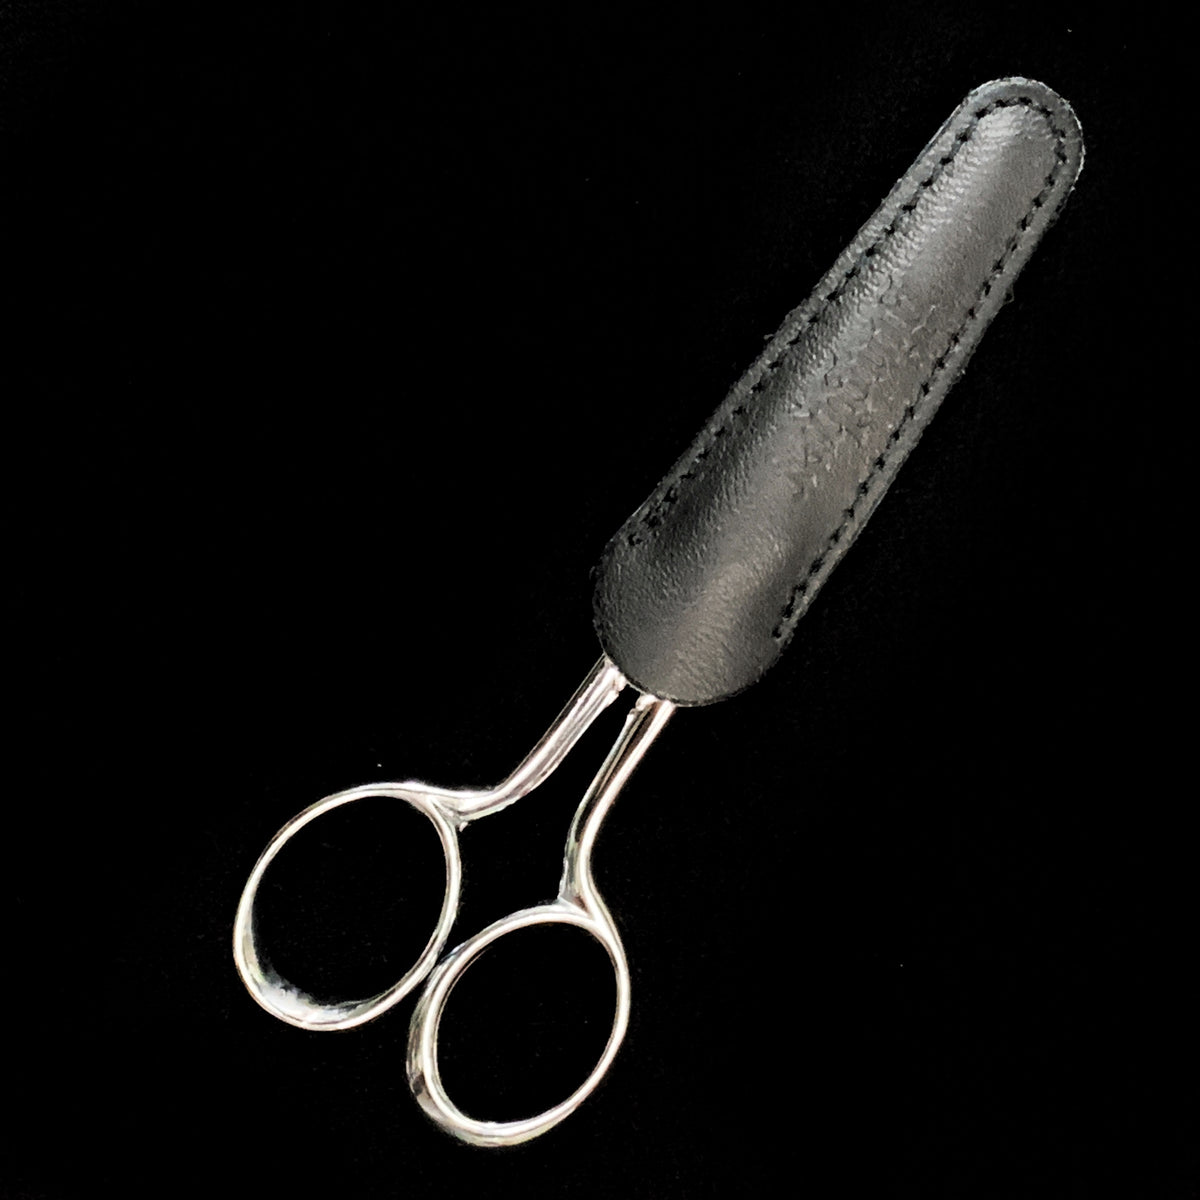 Gingher Knife Edge Applique Scissors 220200-1101 – Good's Store Online